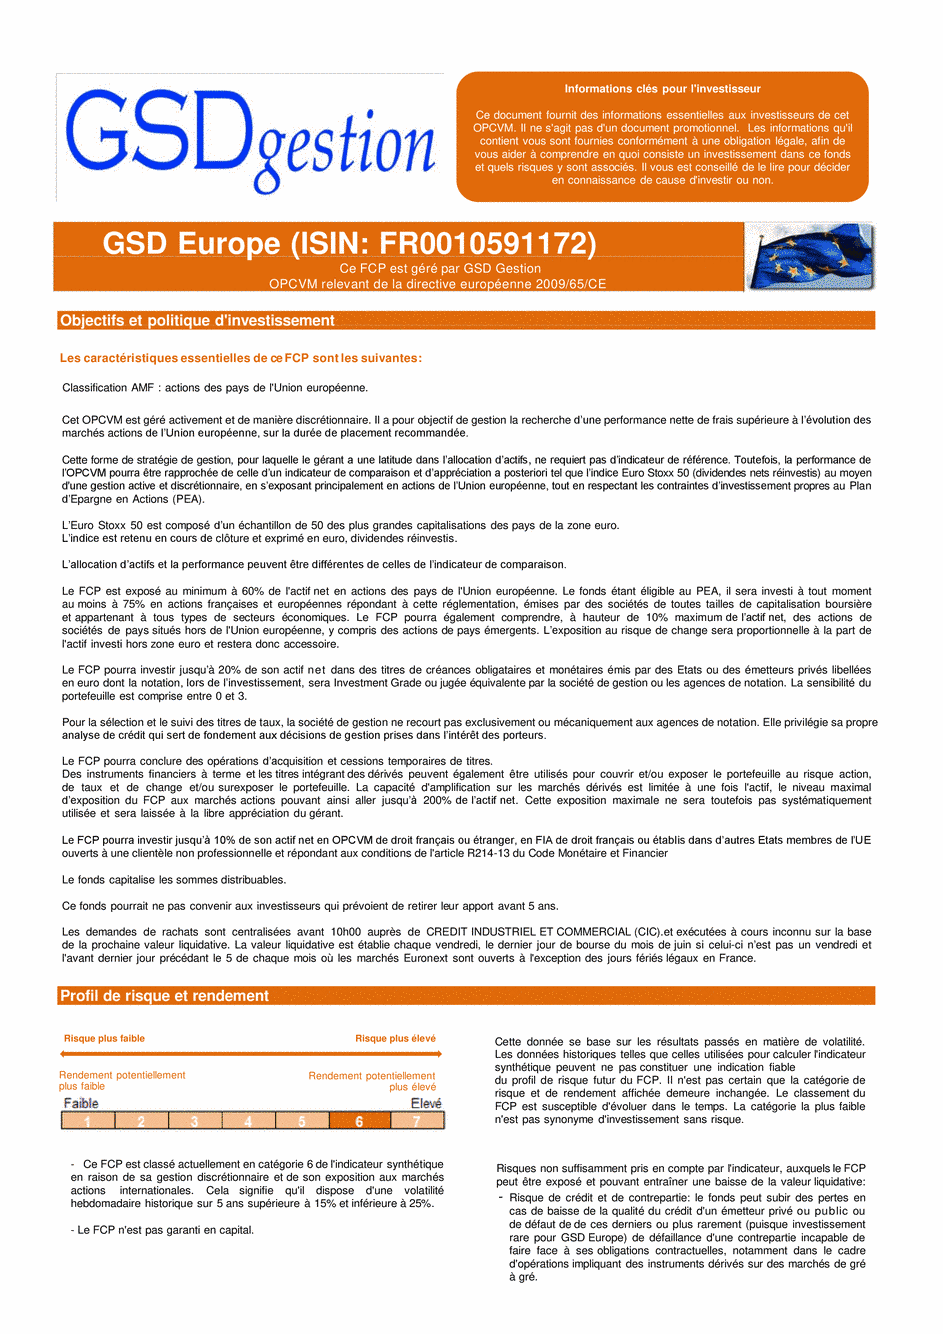 DICI-Prospectus Complet GSD Europe - 15/04/2021 - Français